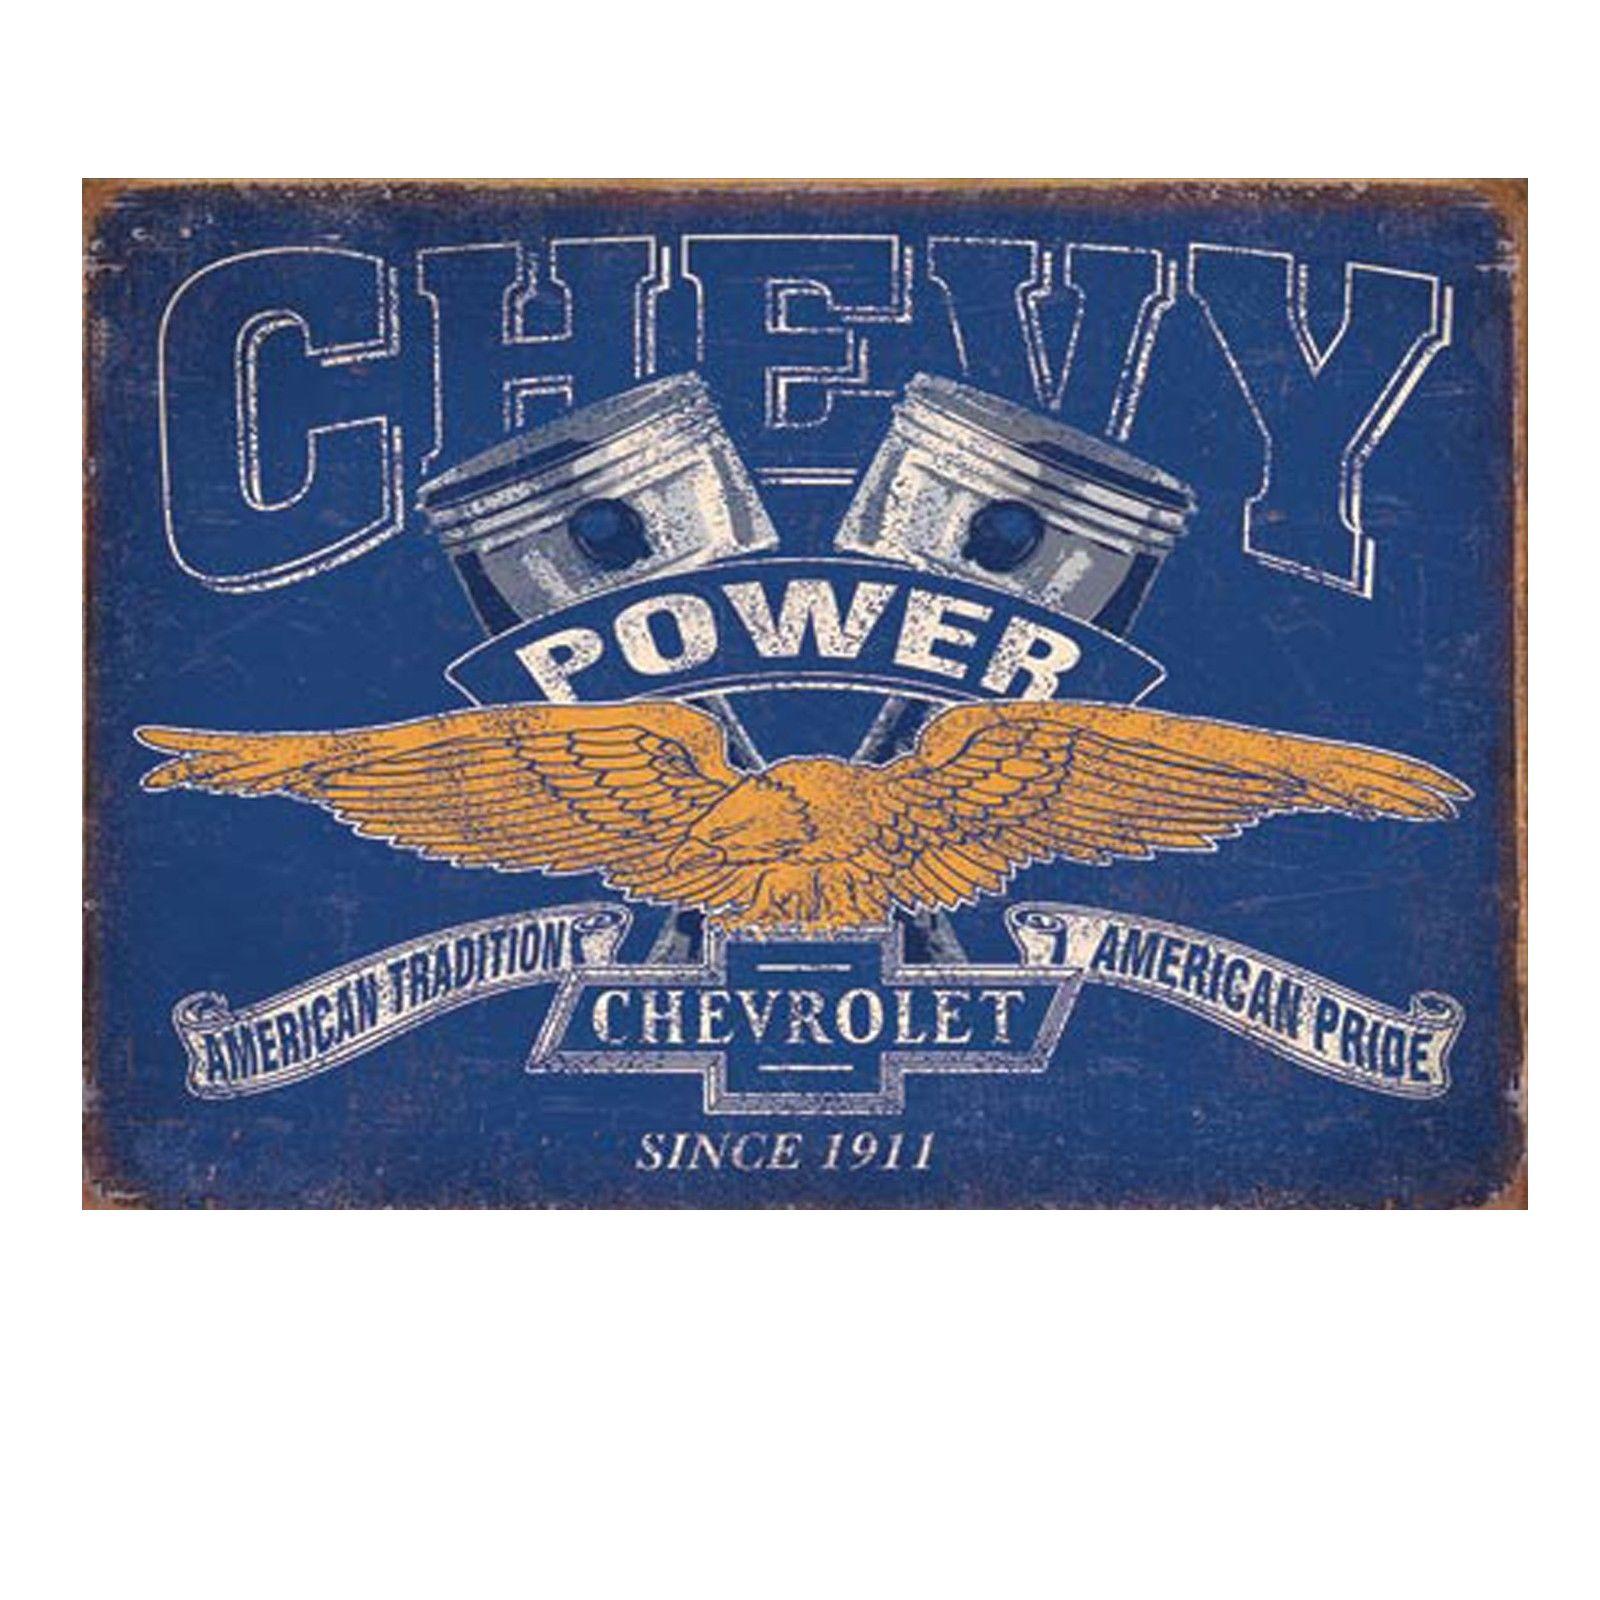 Chevrolet Garage Logo - Chevy Hotrod Metal Tin Wall Sign Plaque chevrolet Vintage Car Garage